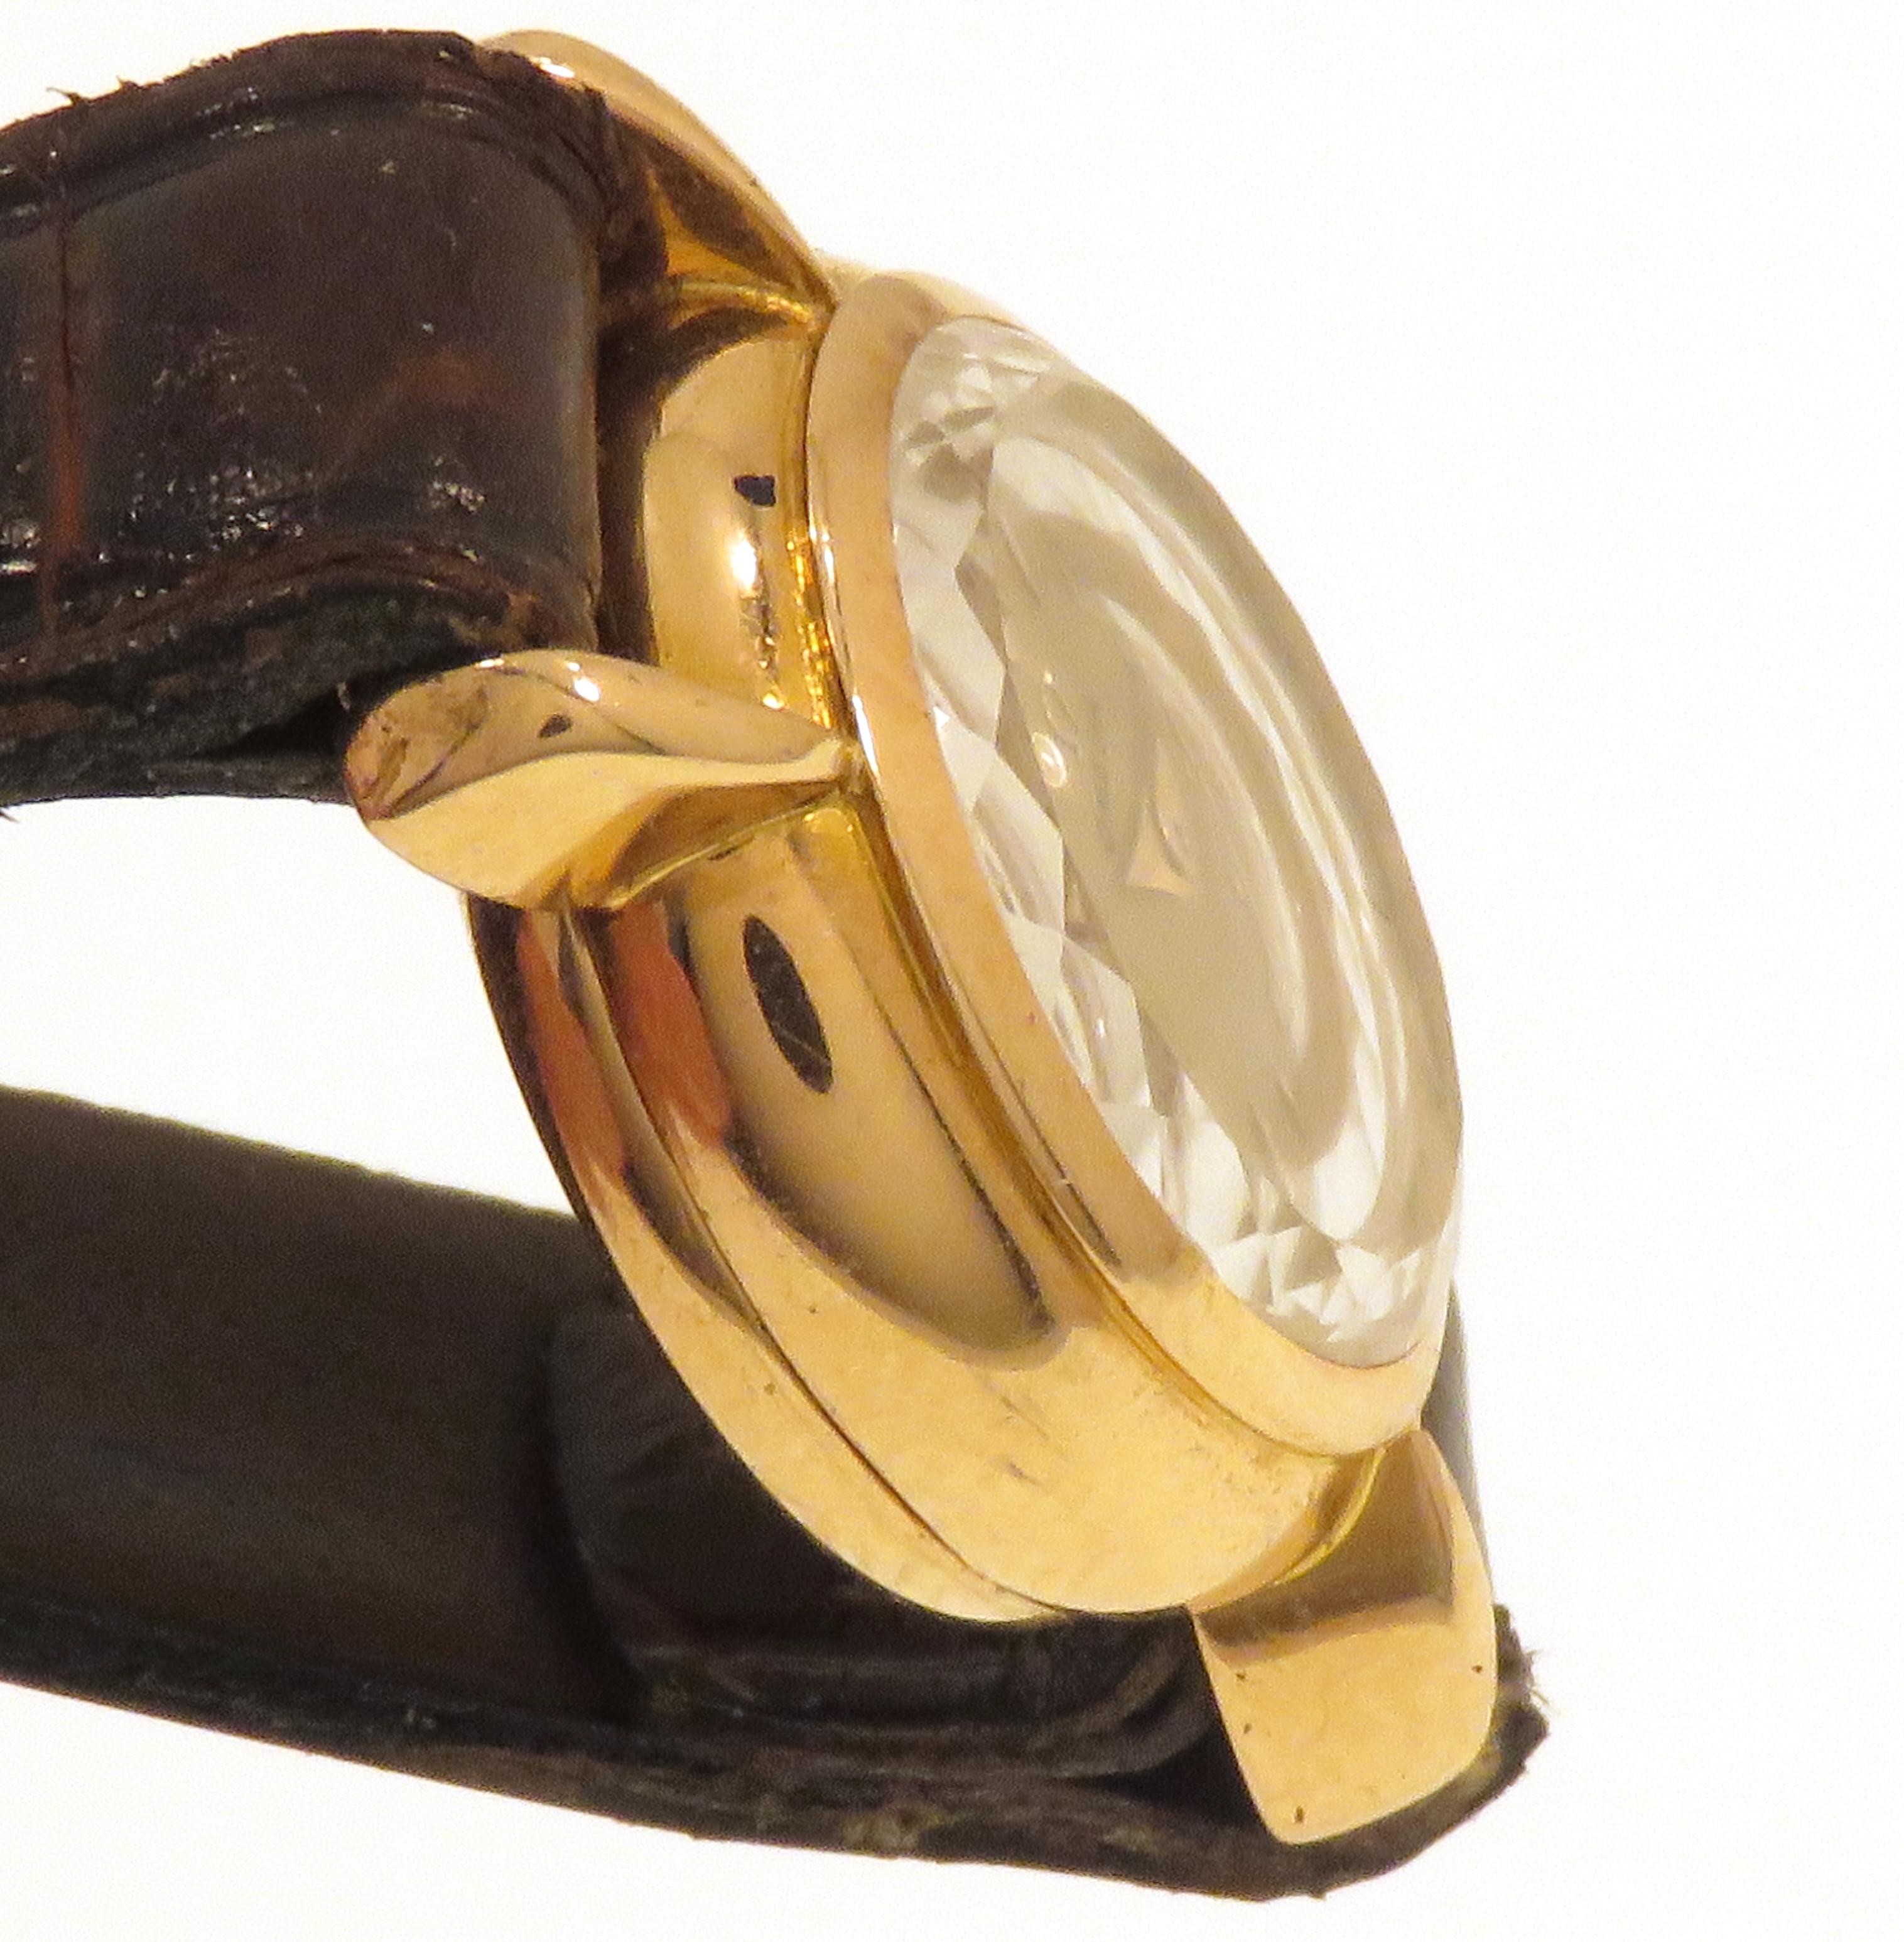 Omega Women's 1950 Gold Wrist Watch For Sale 1